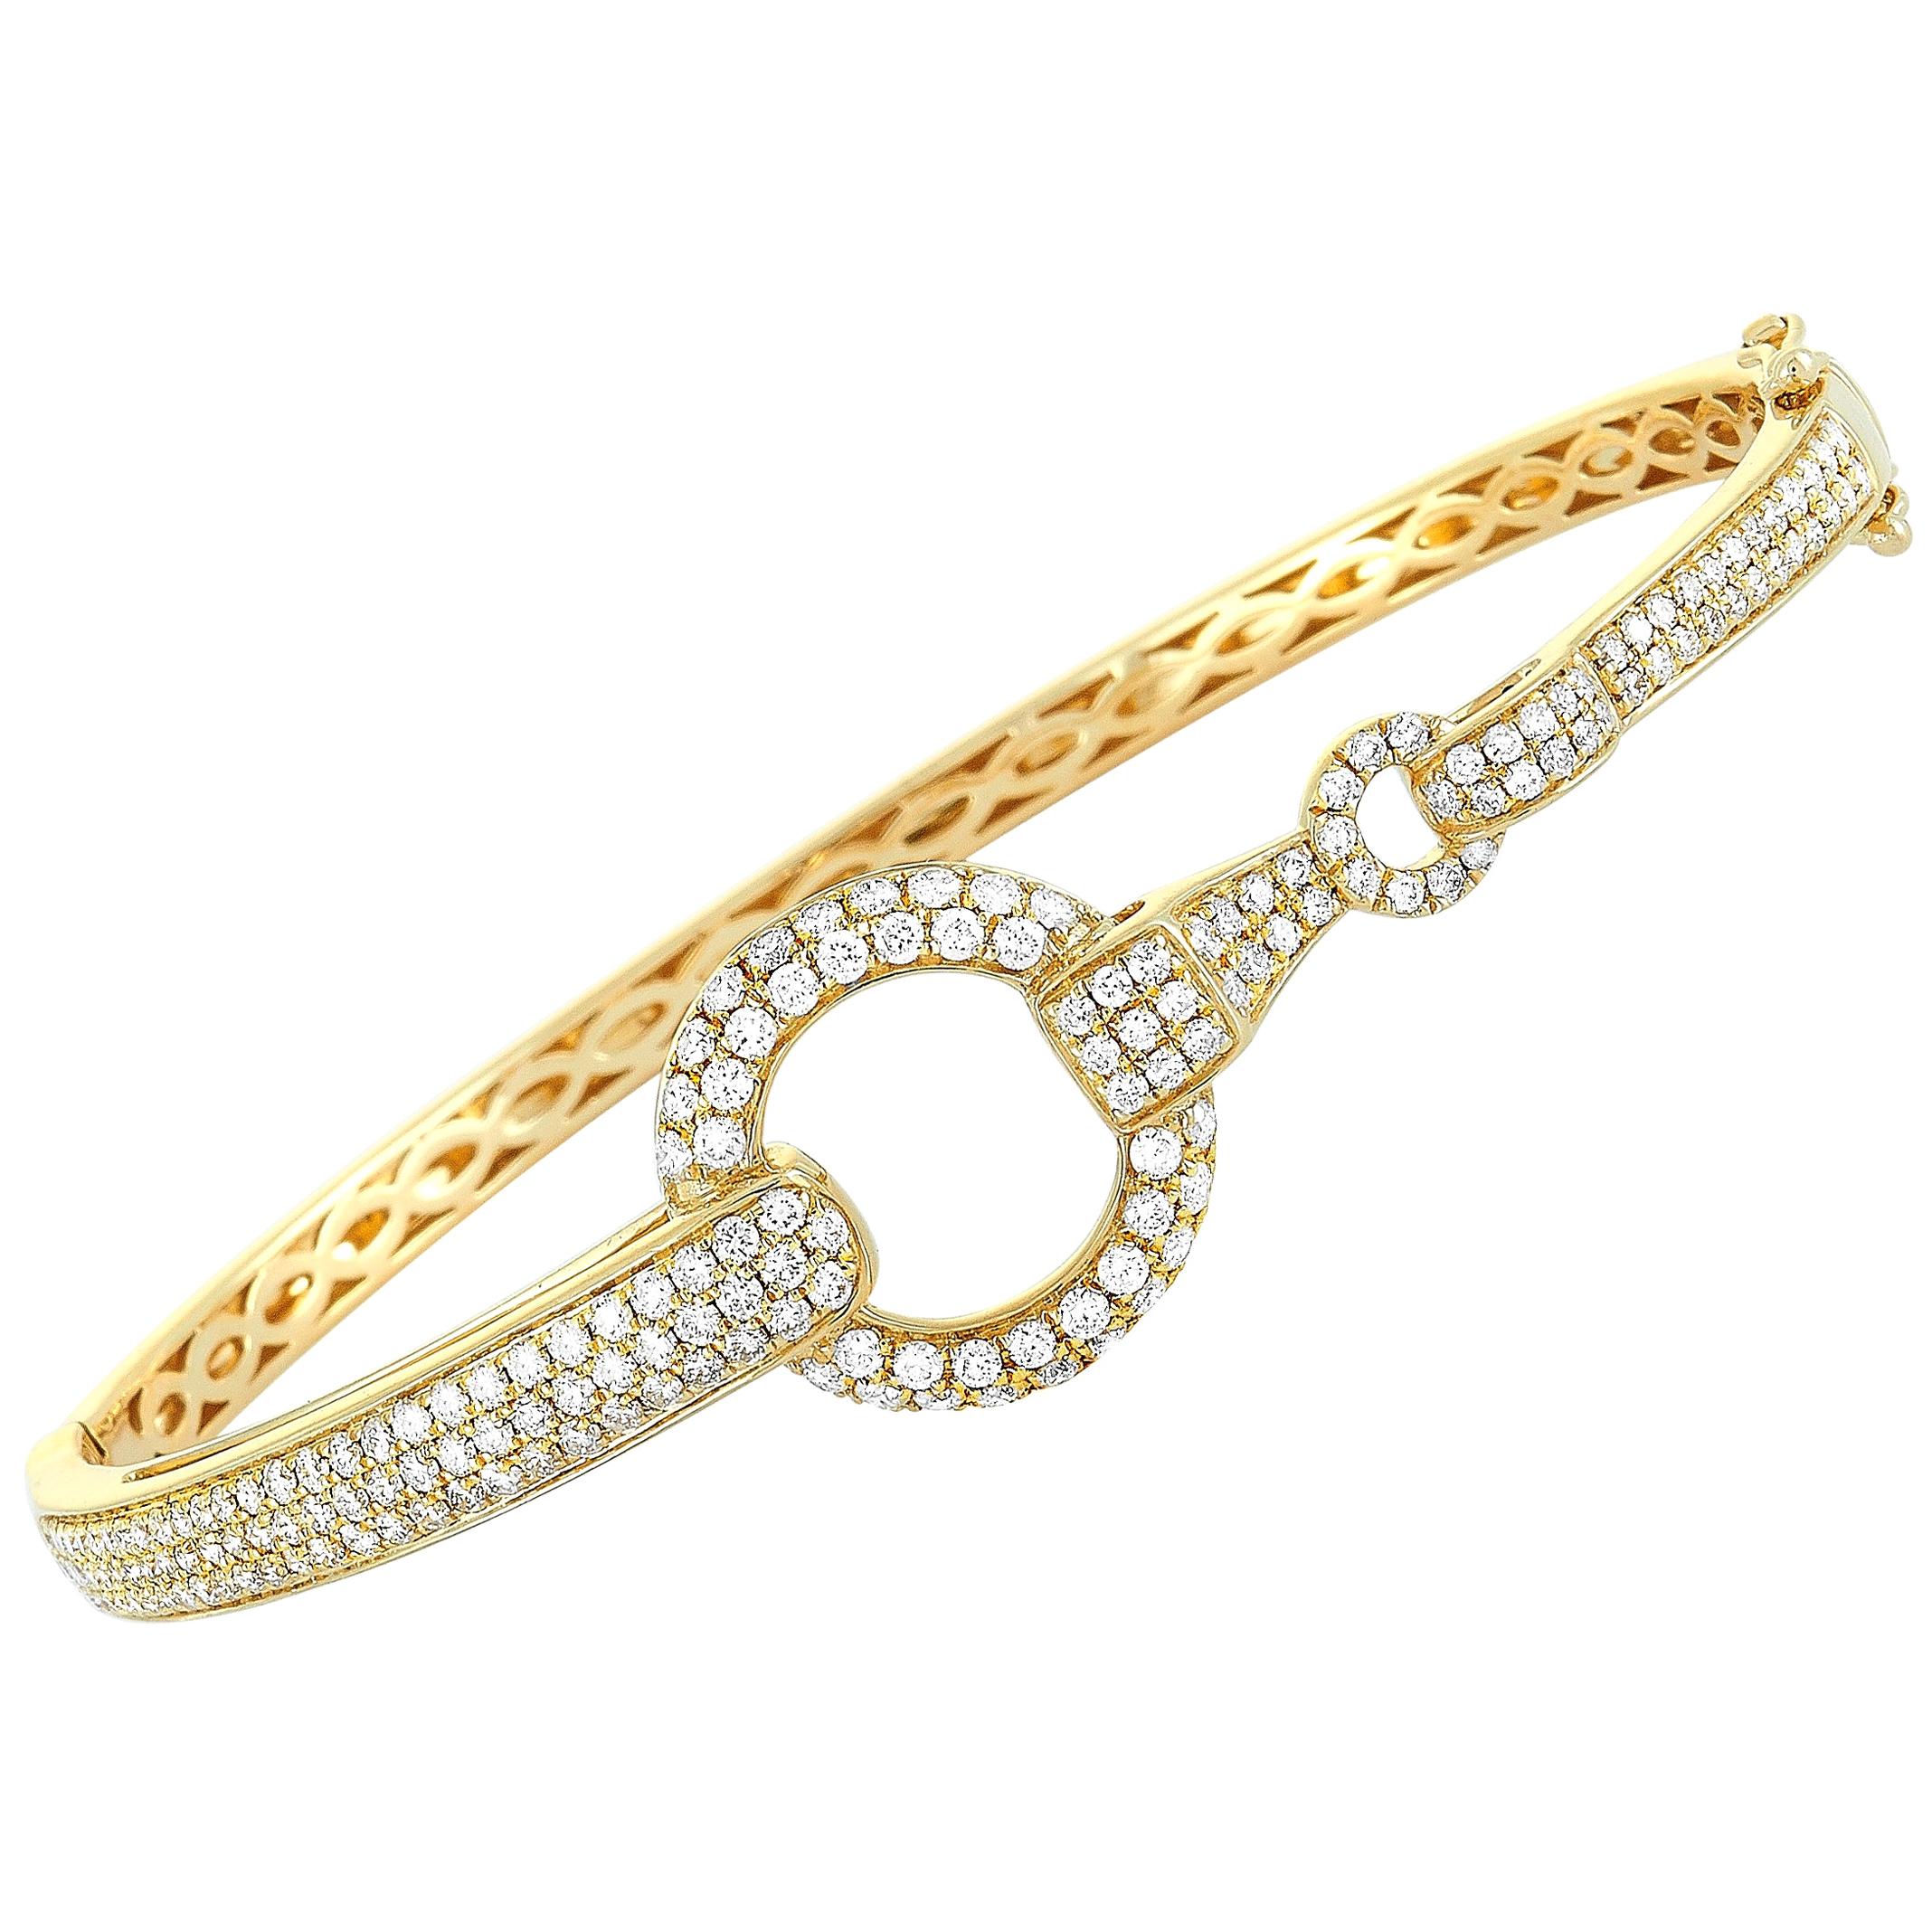 LB Exclusive 18 Karat Yellow Gold, 1.70 Carat Diamond Bangle Bracelet